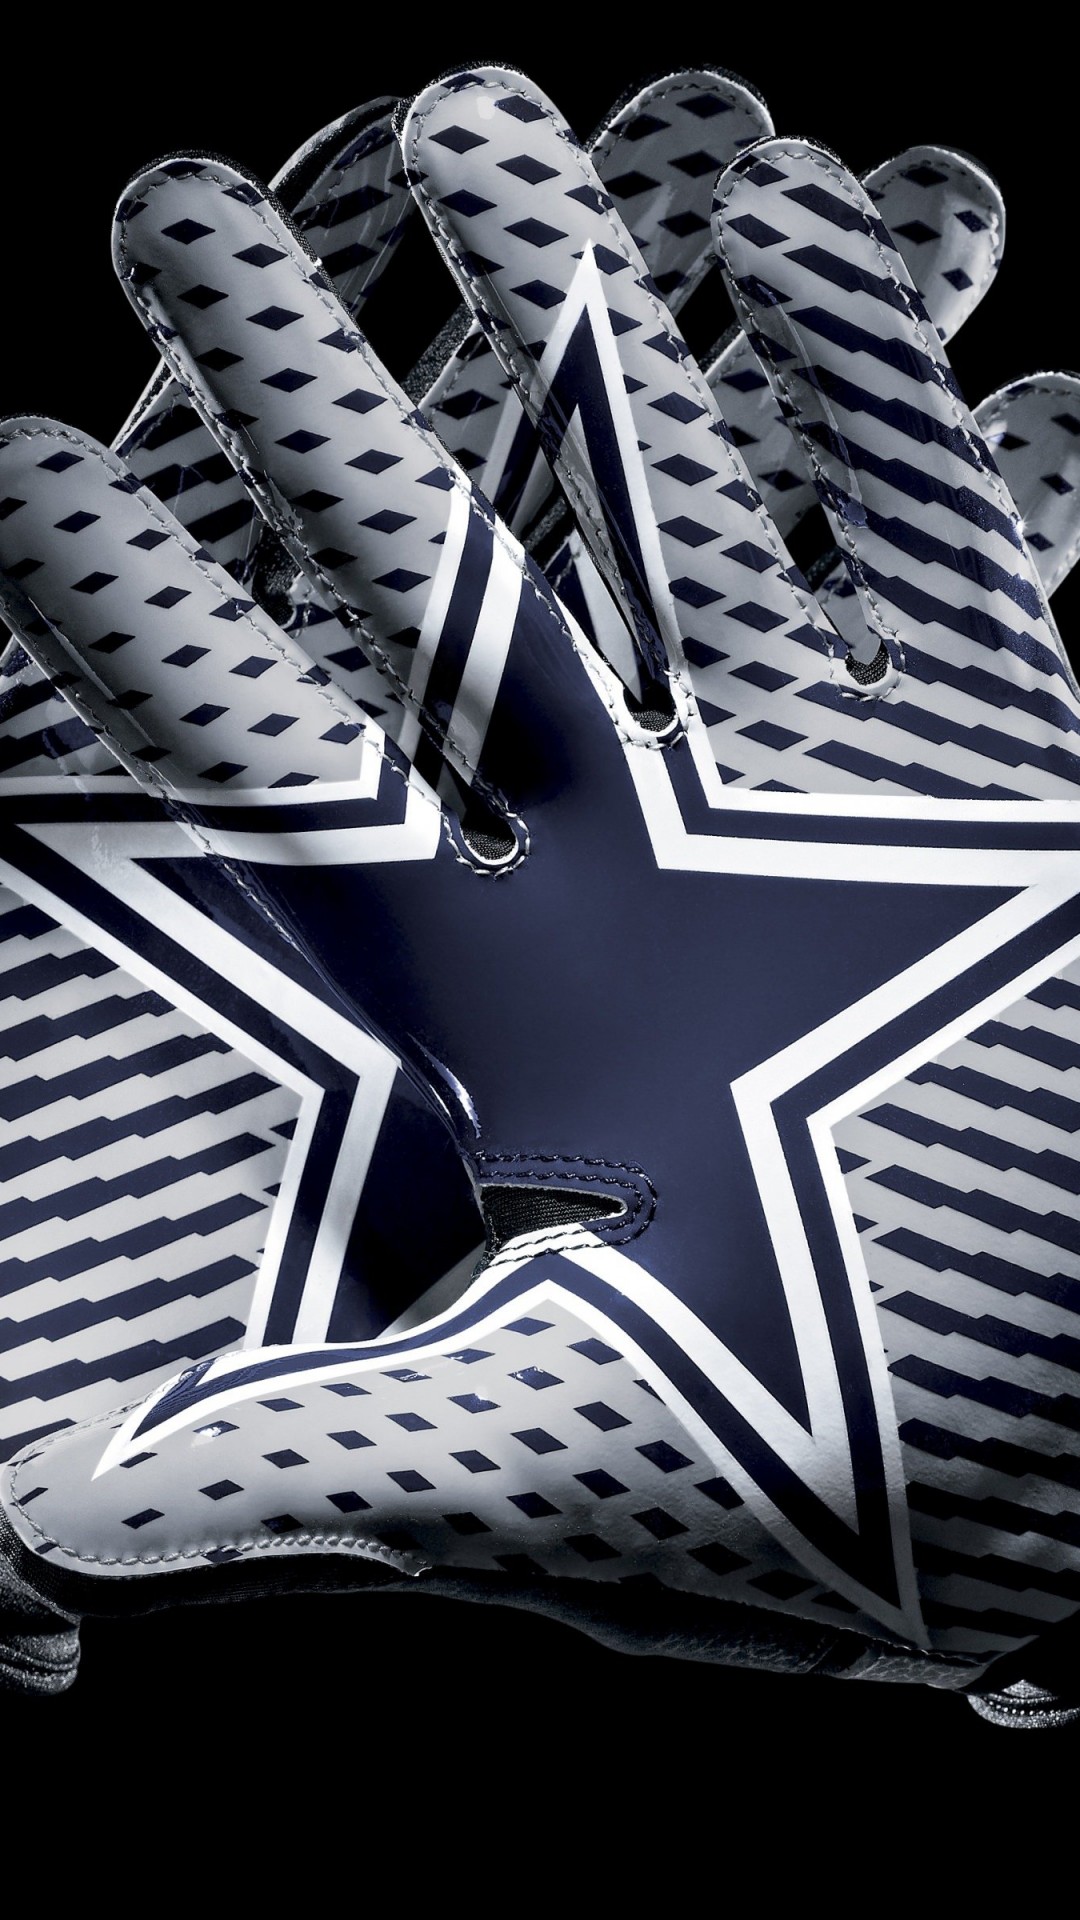 Dallas Cowboys Gloves Wallpaper for SAMSUNG Galaxy S5